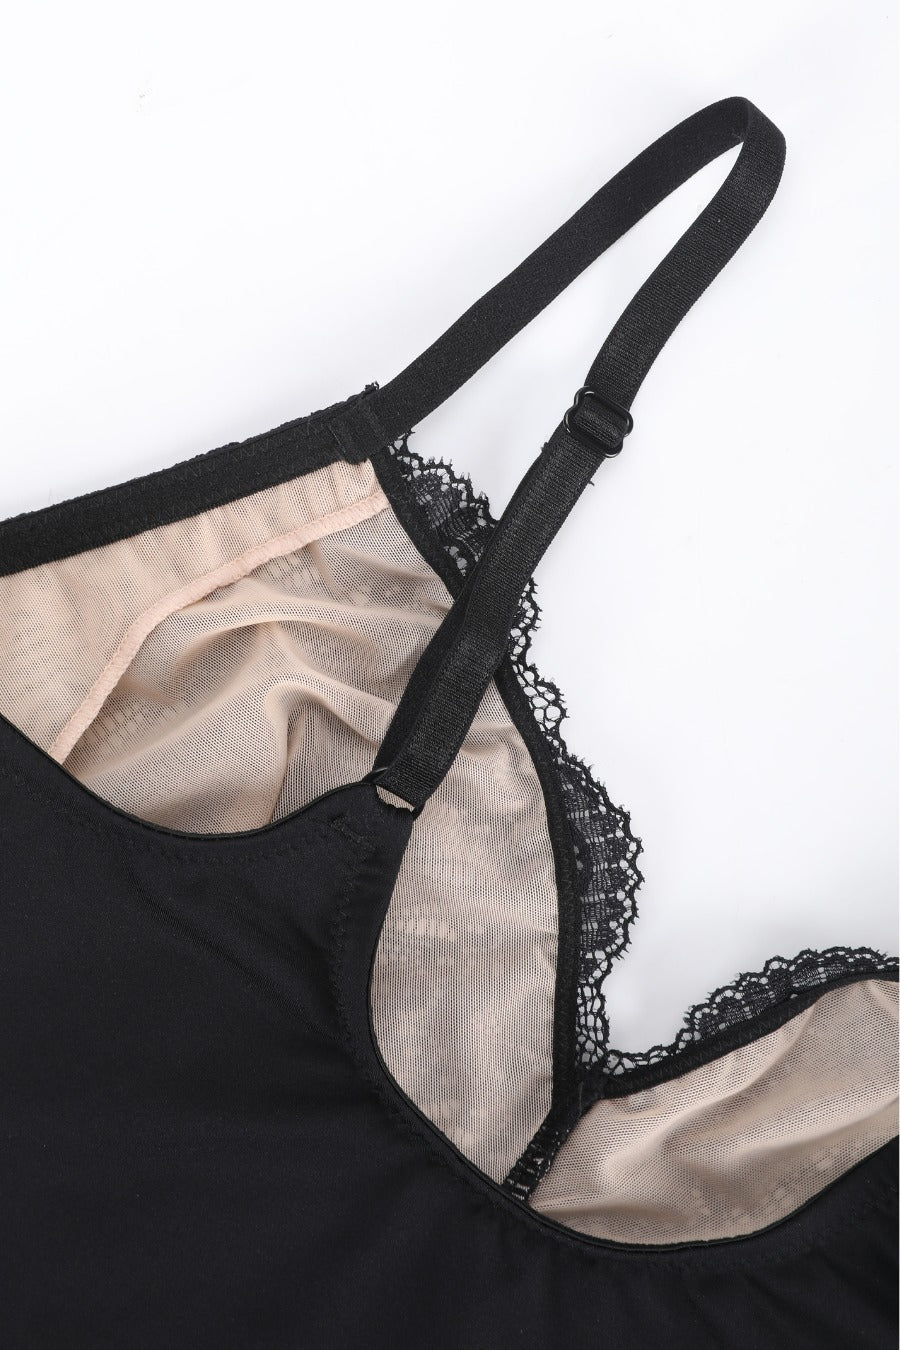 Aria Shaping Lace Bodysuit - Black Contour Clothing